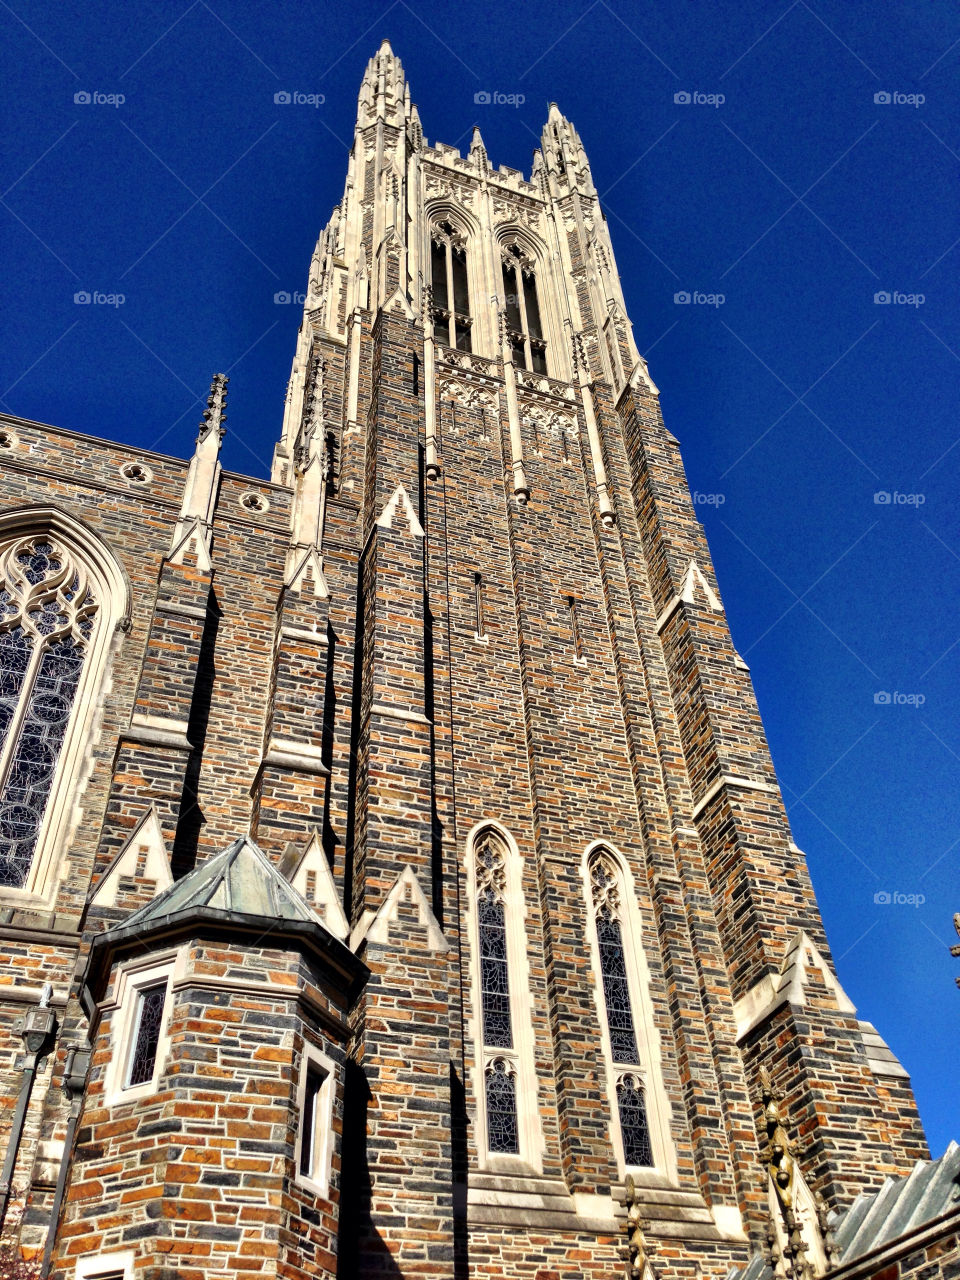 Duke University Chapel